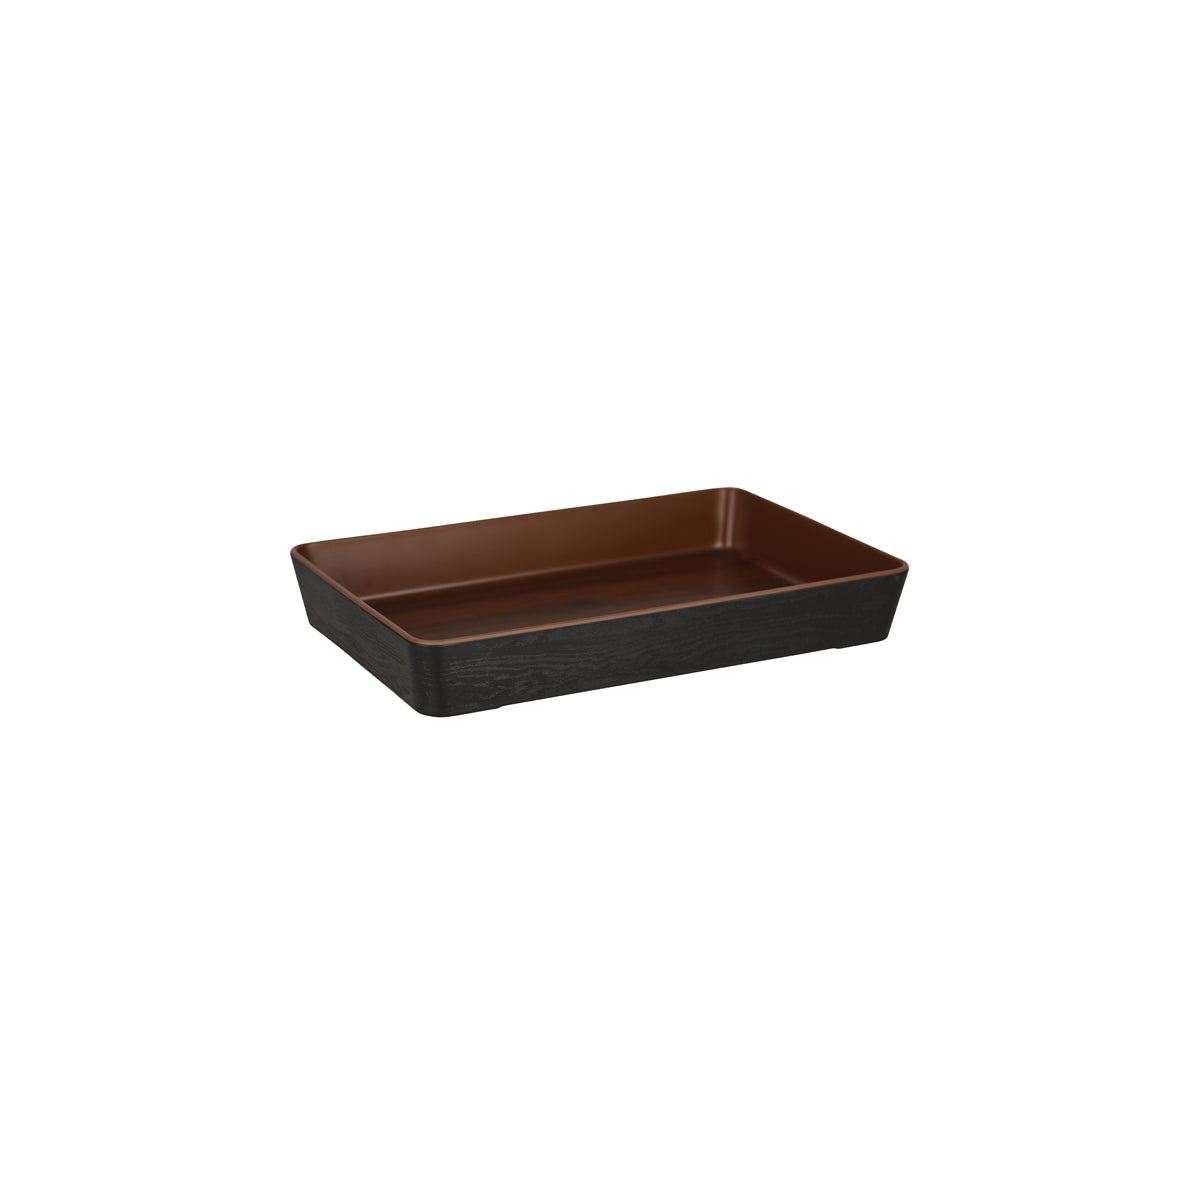 46391 Zicco Zicco Bento Box Walnut / Black Inroom Tray Base Tomkin Australia Hospitality Supplies